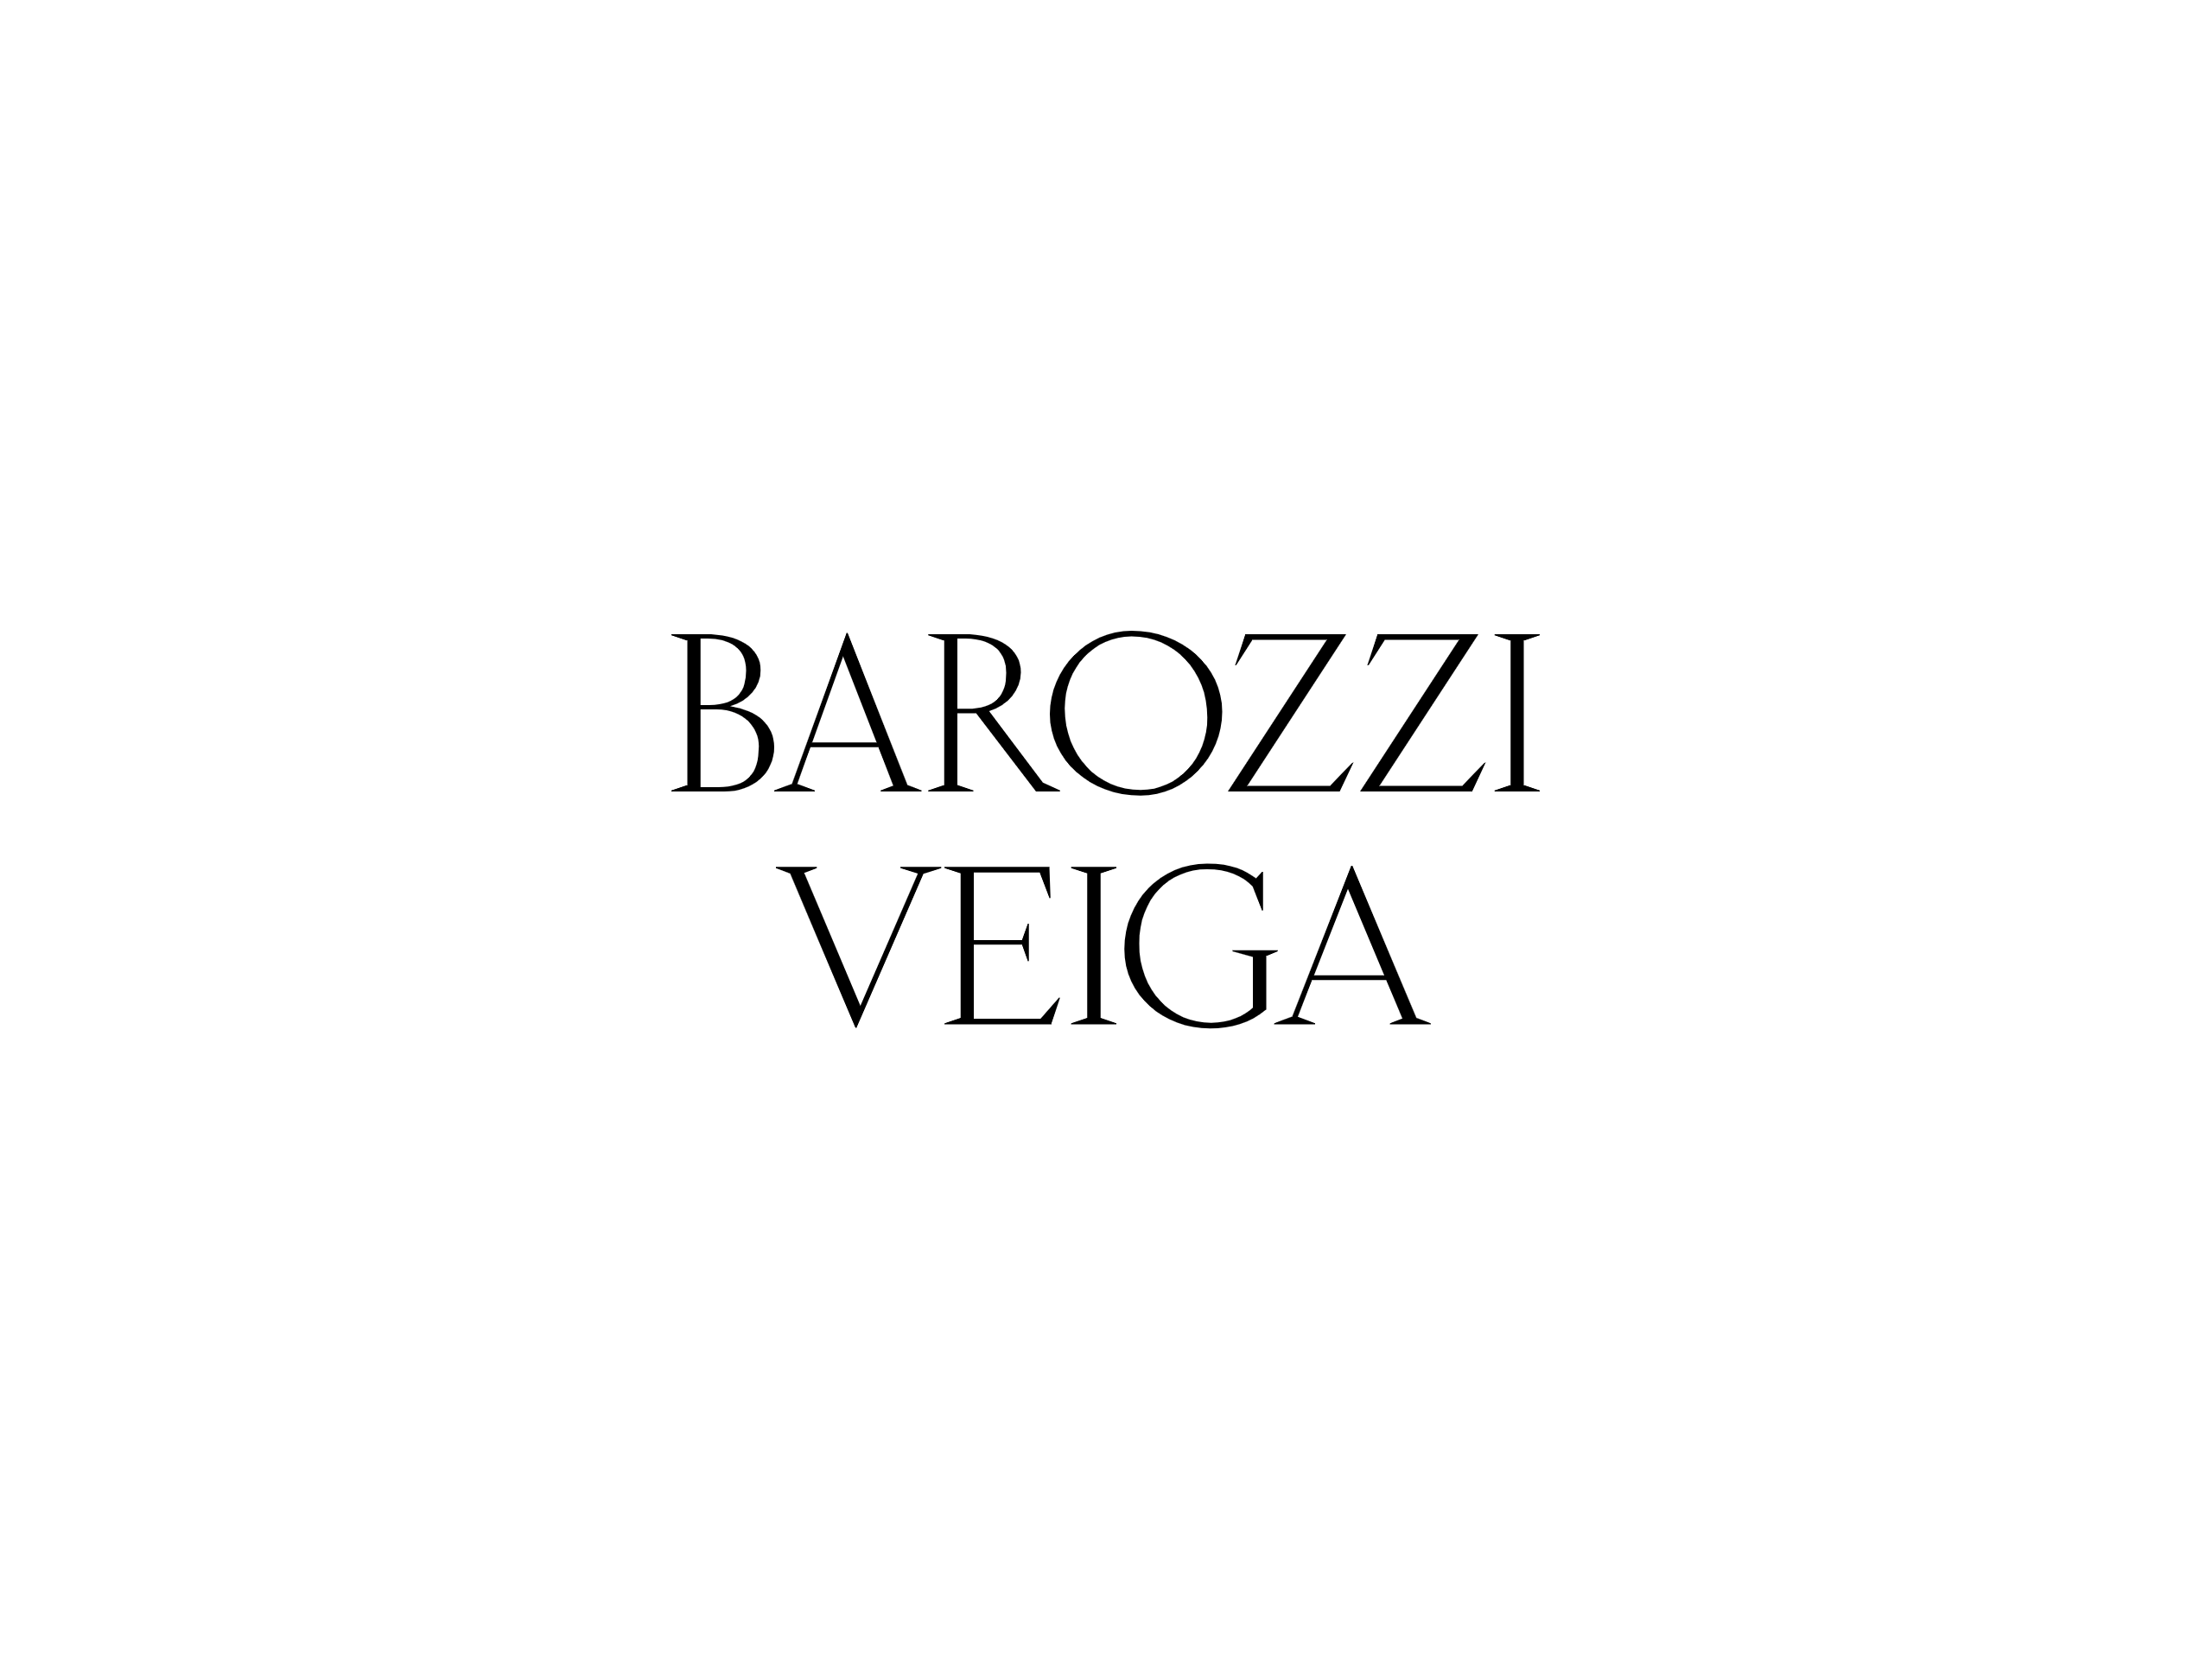 Barozzi Veiga website homepage